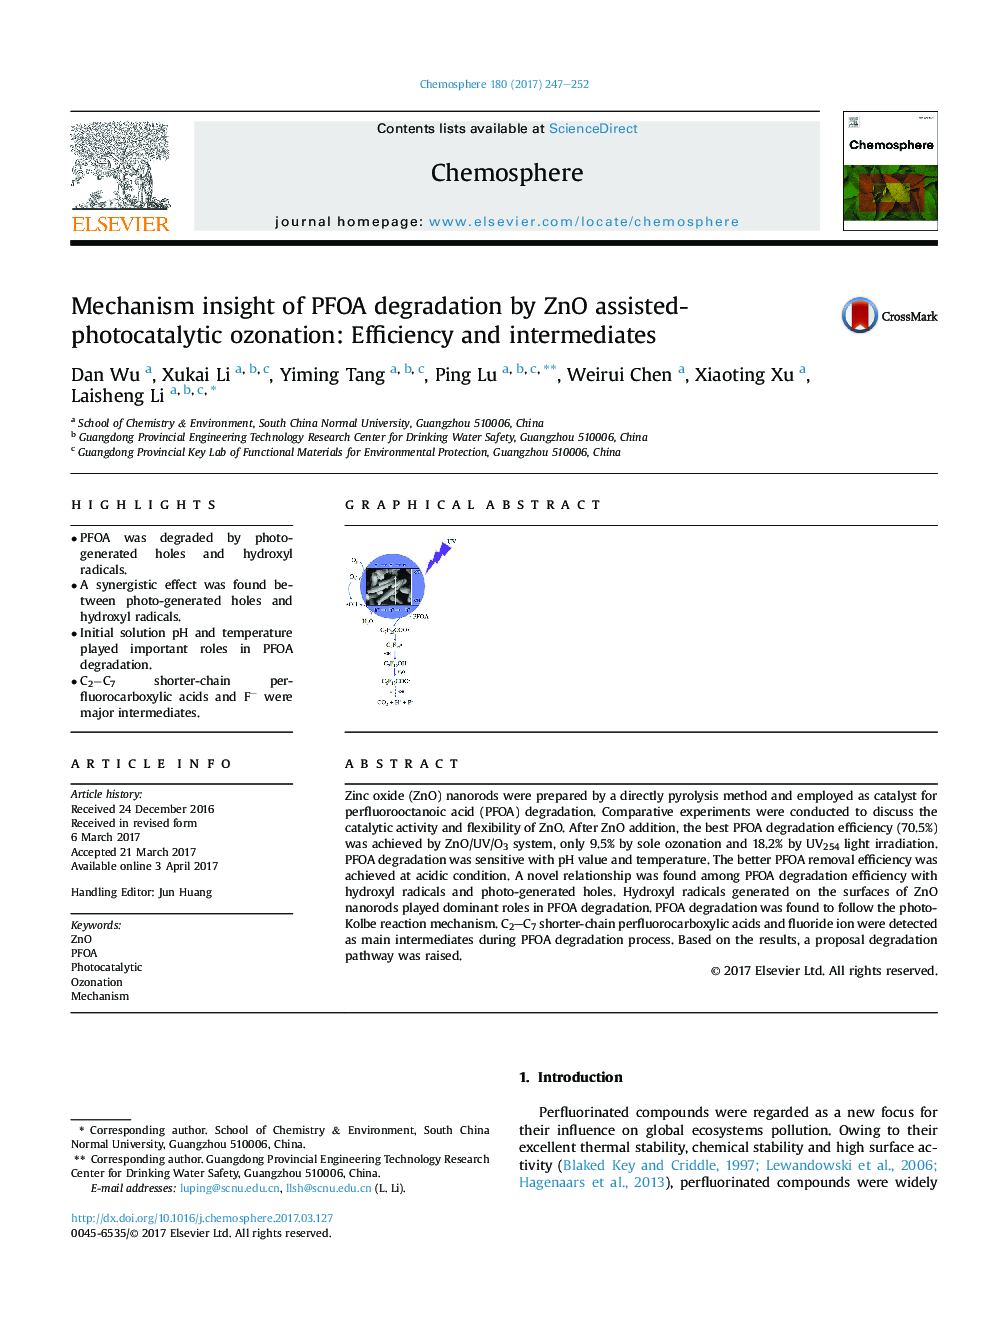 Mechanism insight of PFOA degradation by ZnO assisted-photocatalytic ozonation: Efficiency and intermediates